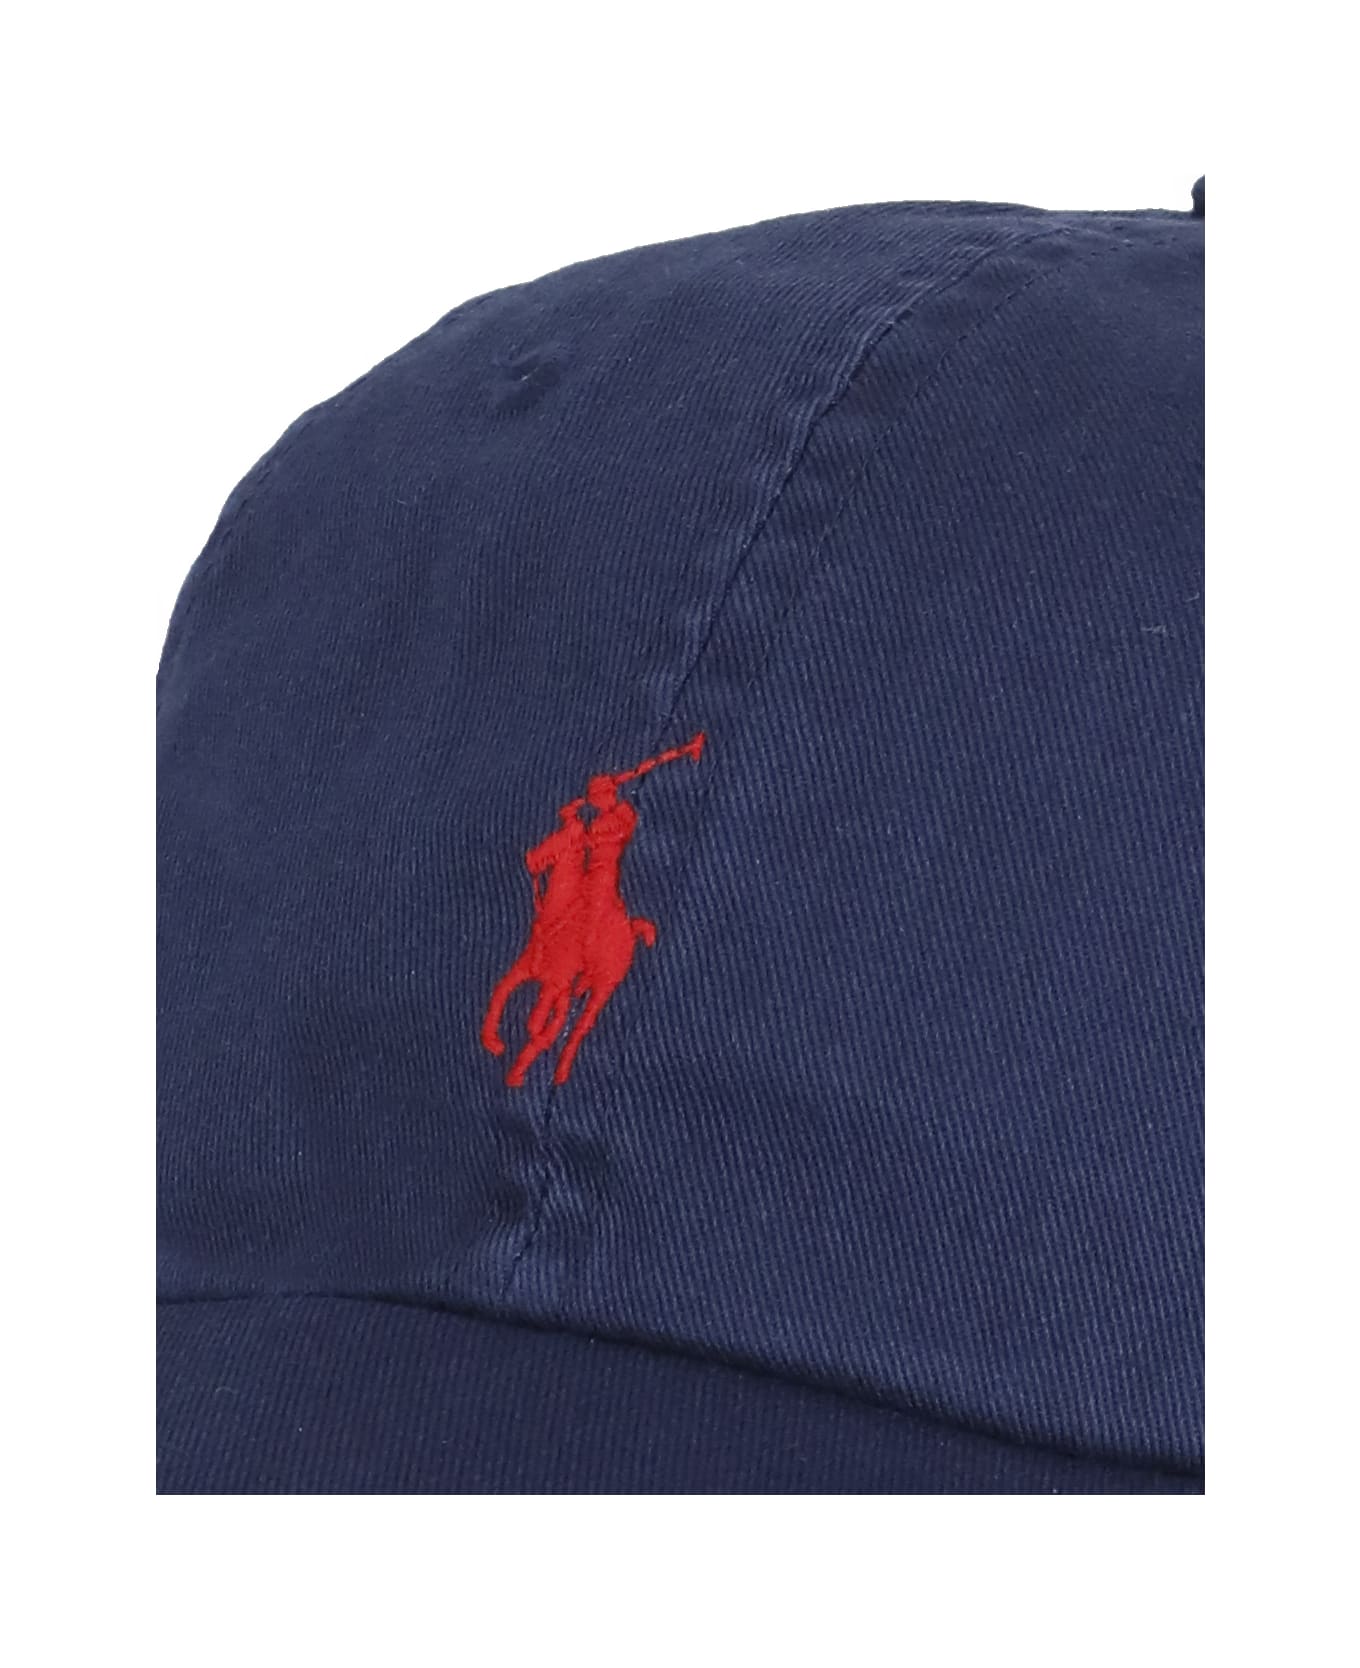 Ralph Lauren Baseball Hat With Pony - Blue